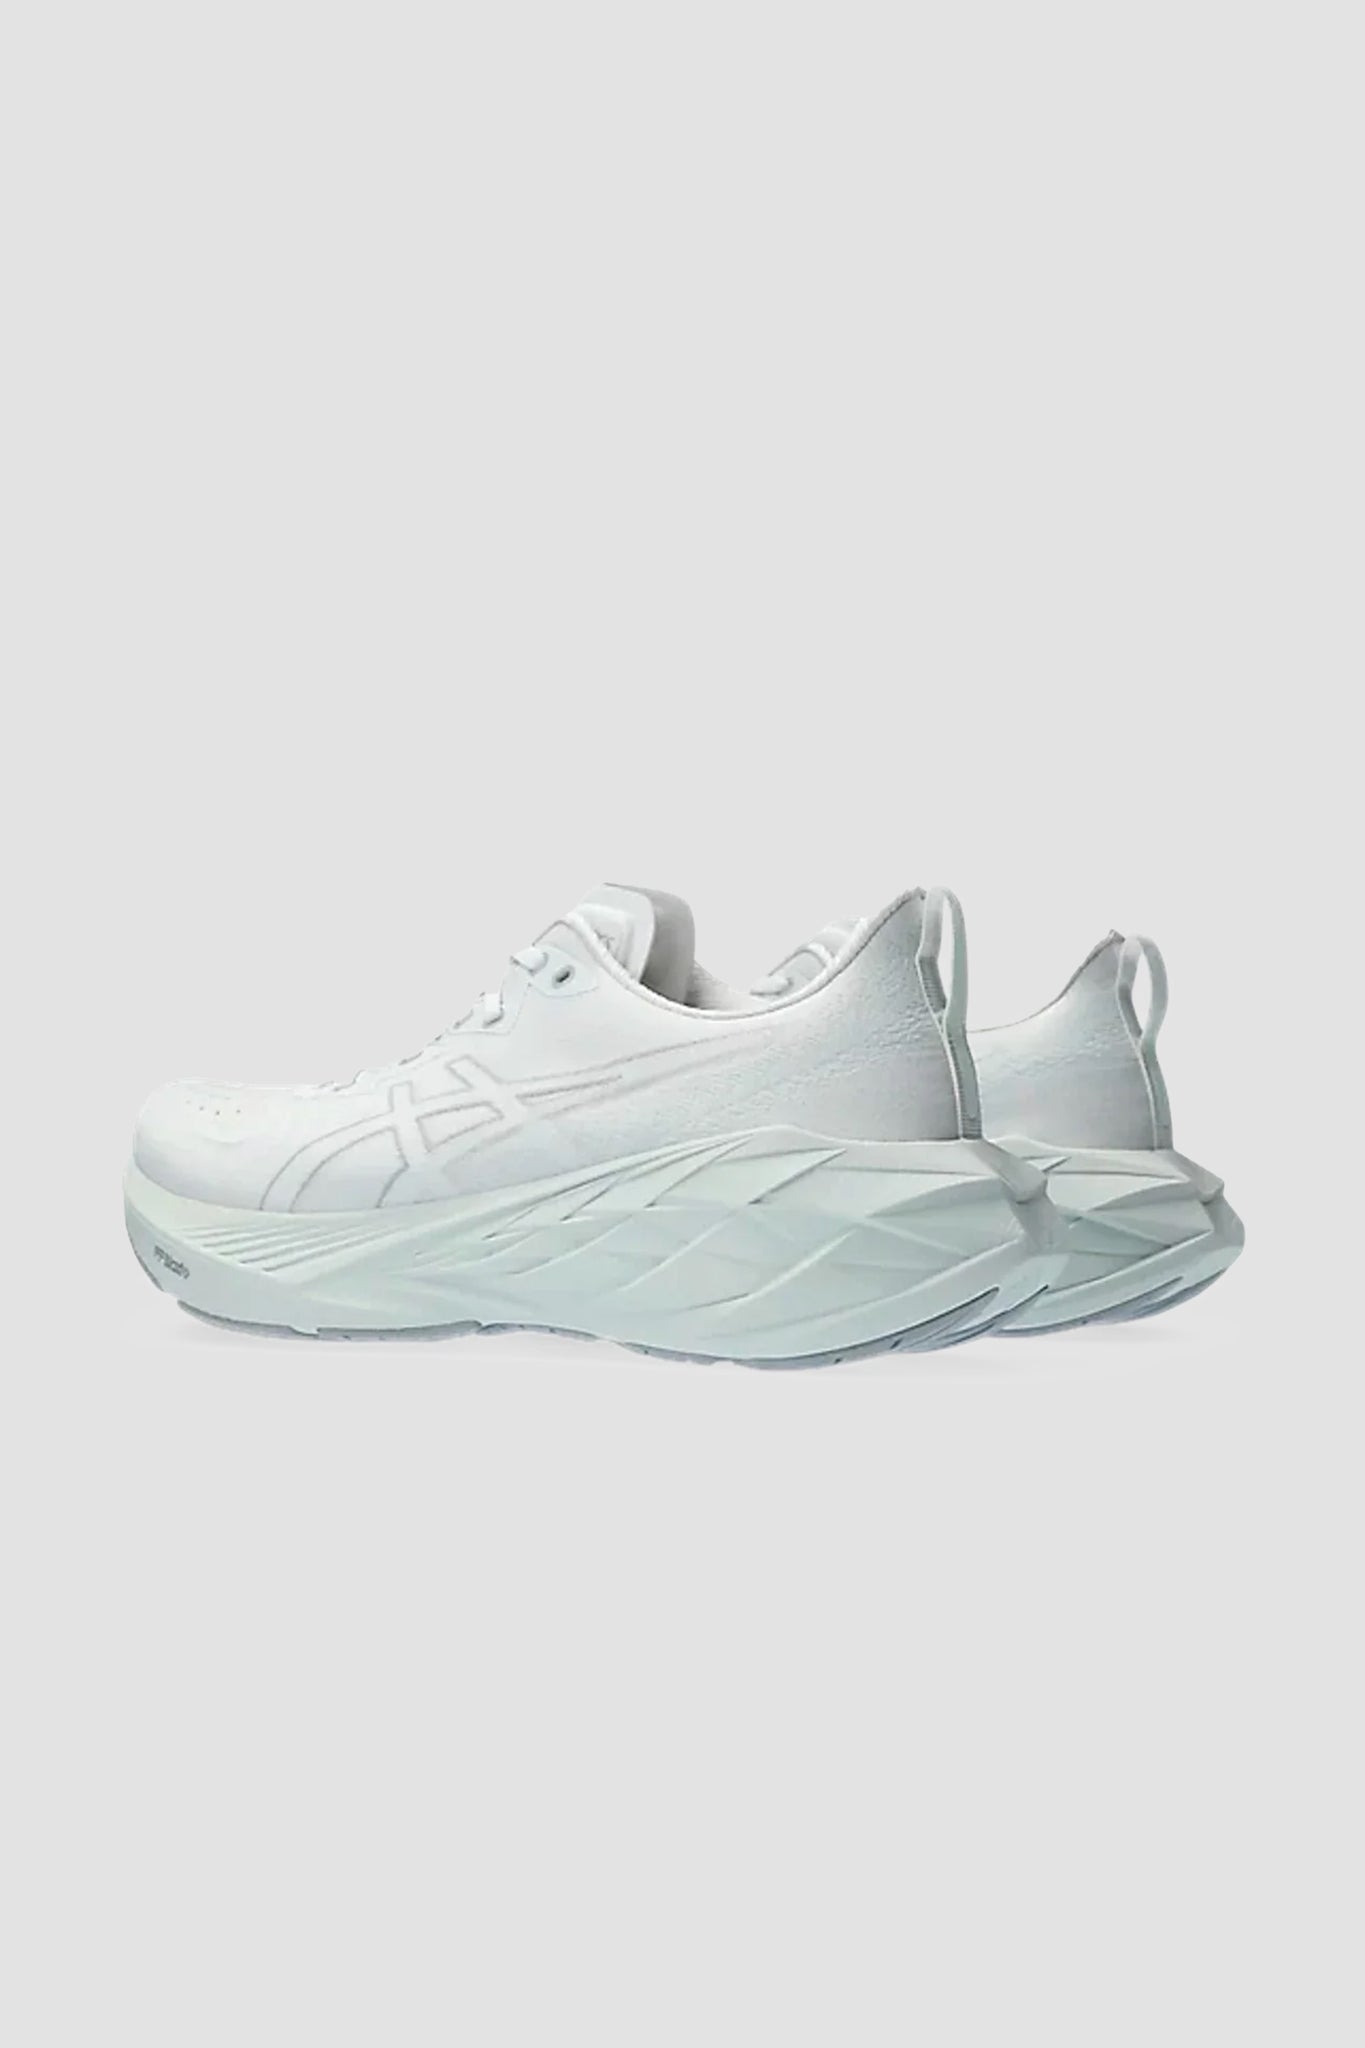 ASICS Men's Novablast 4 Sneaker in White/Pale Mint